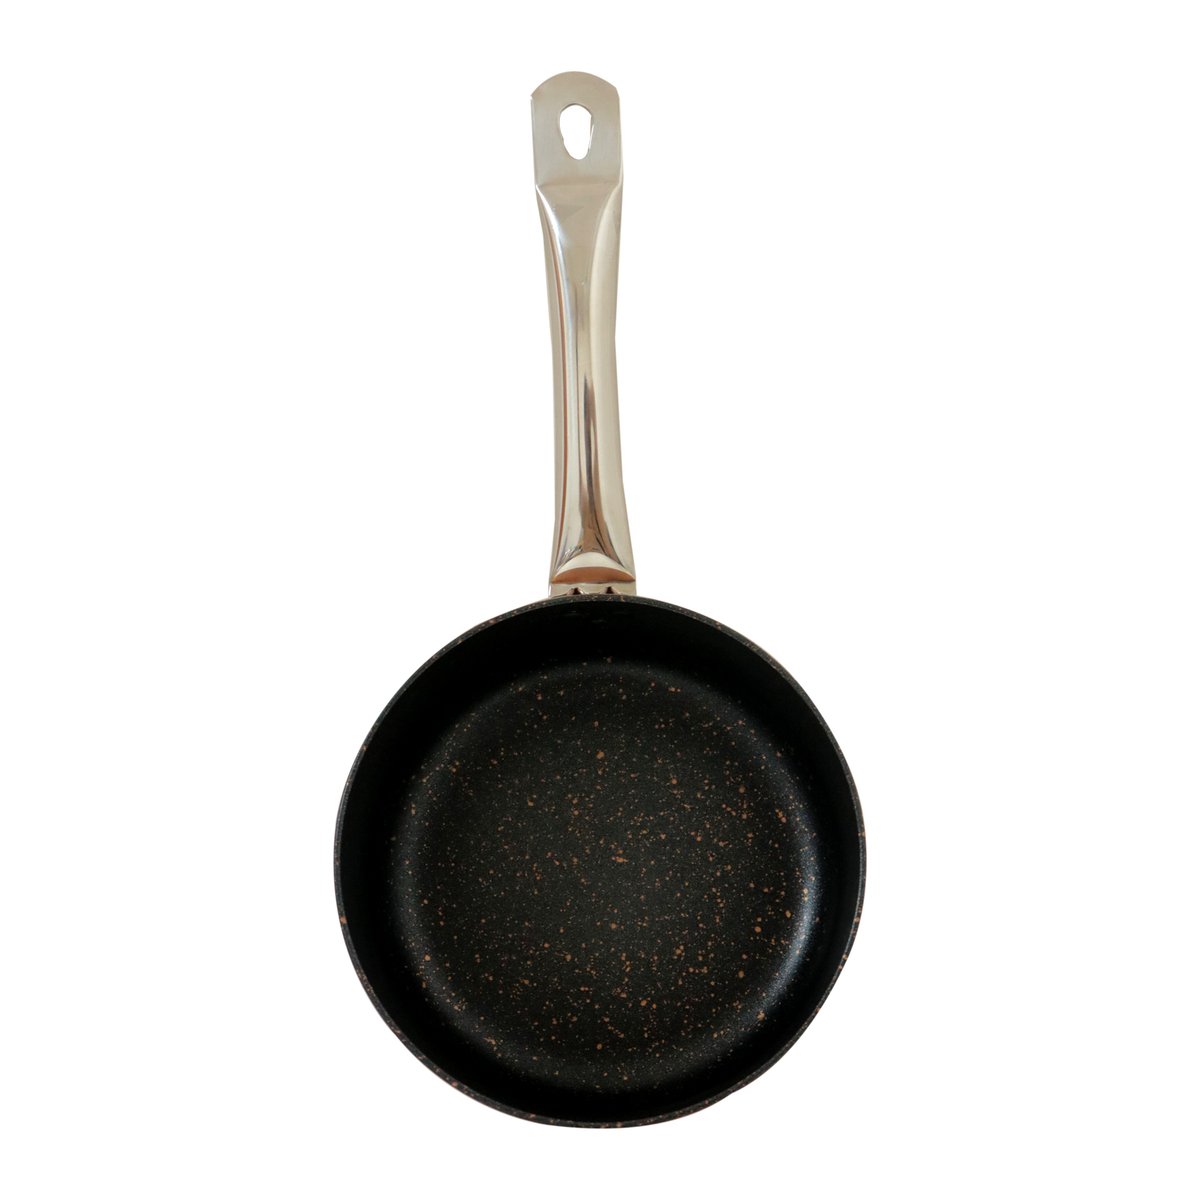 Amer Cook Copper Open Saucepan CF80040018